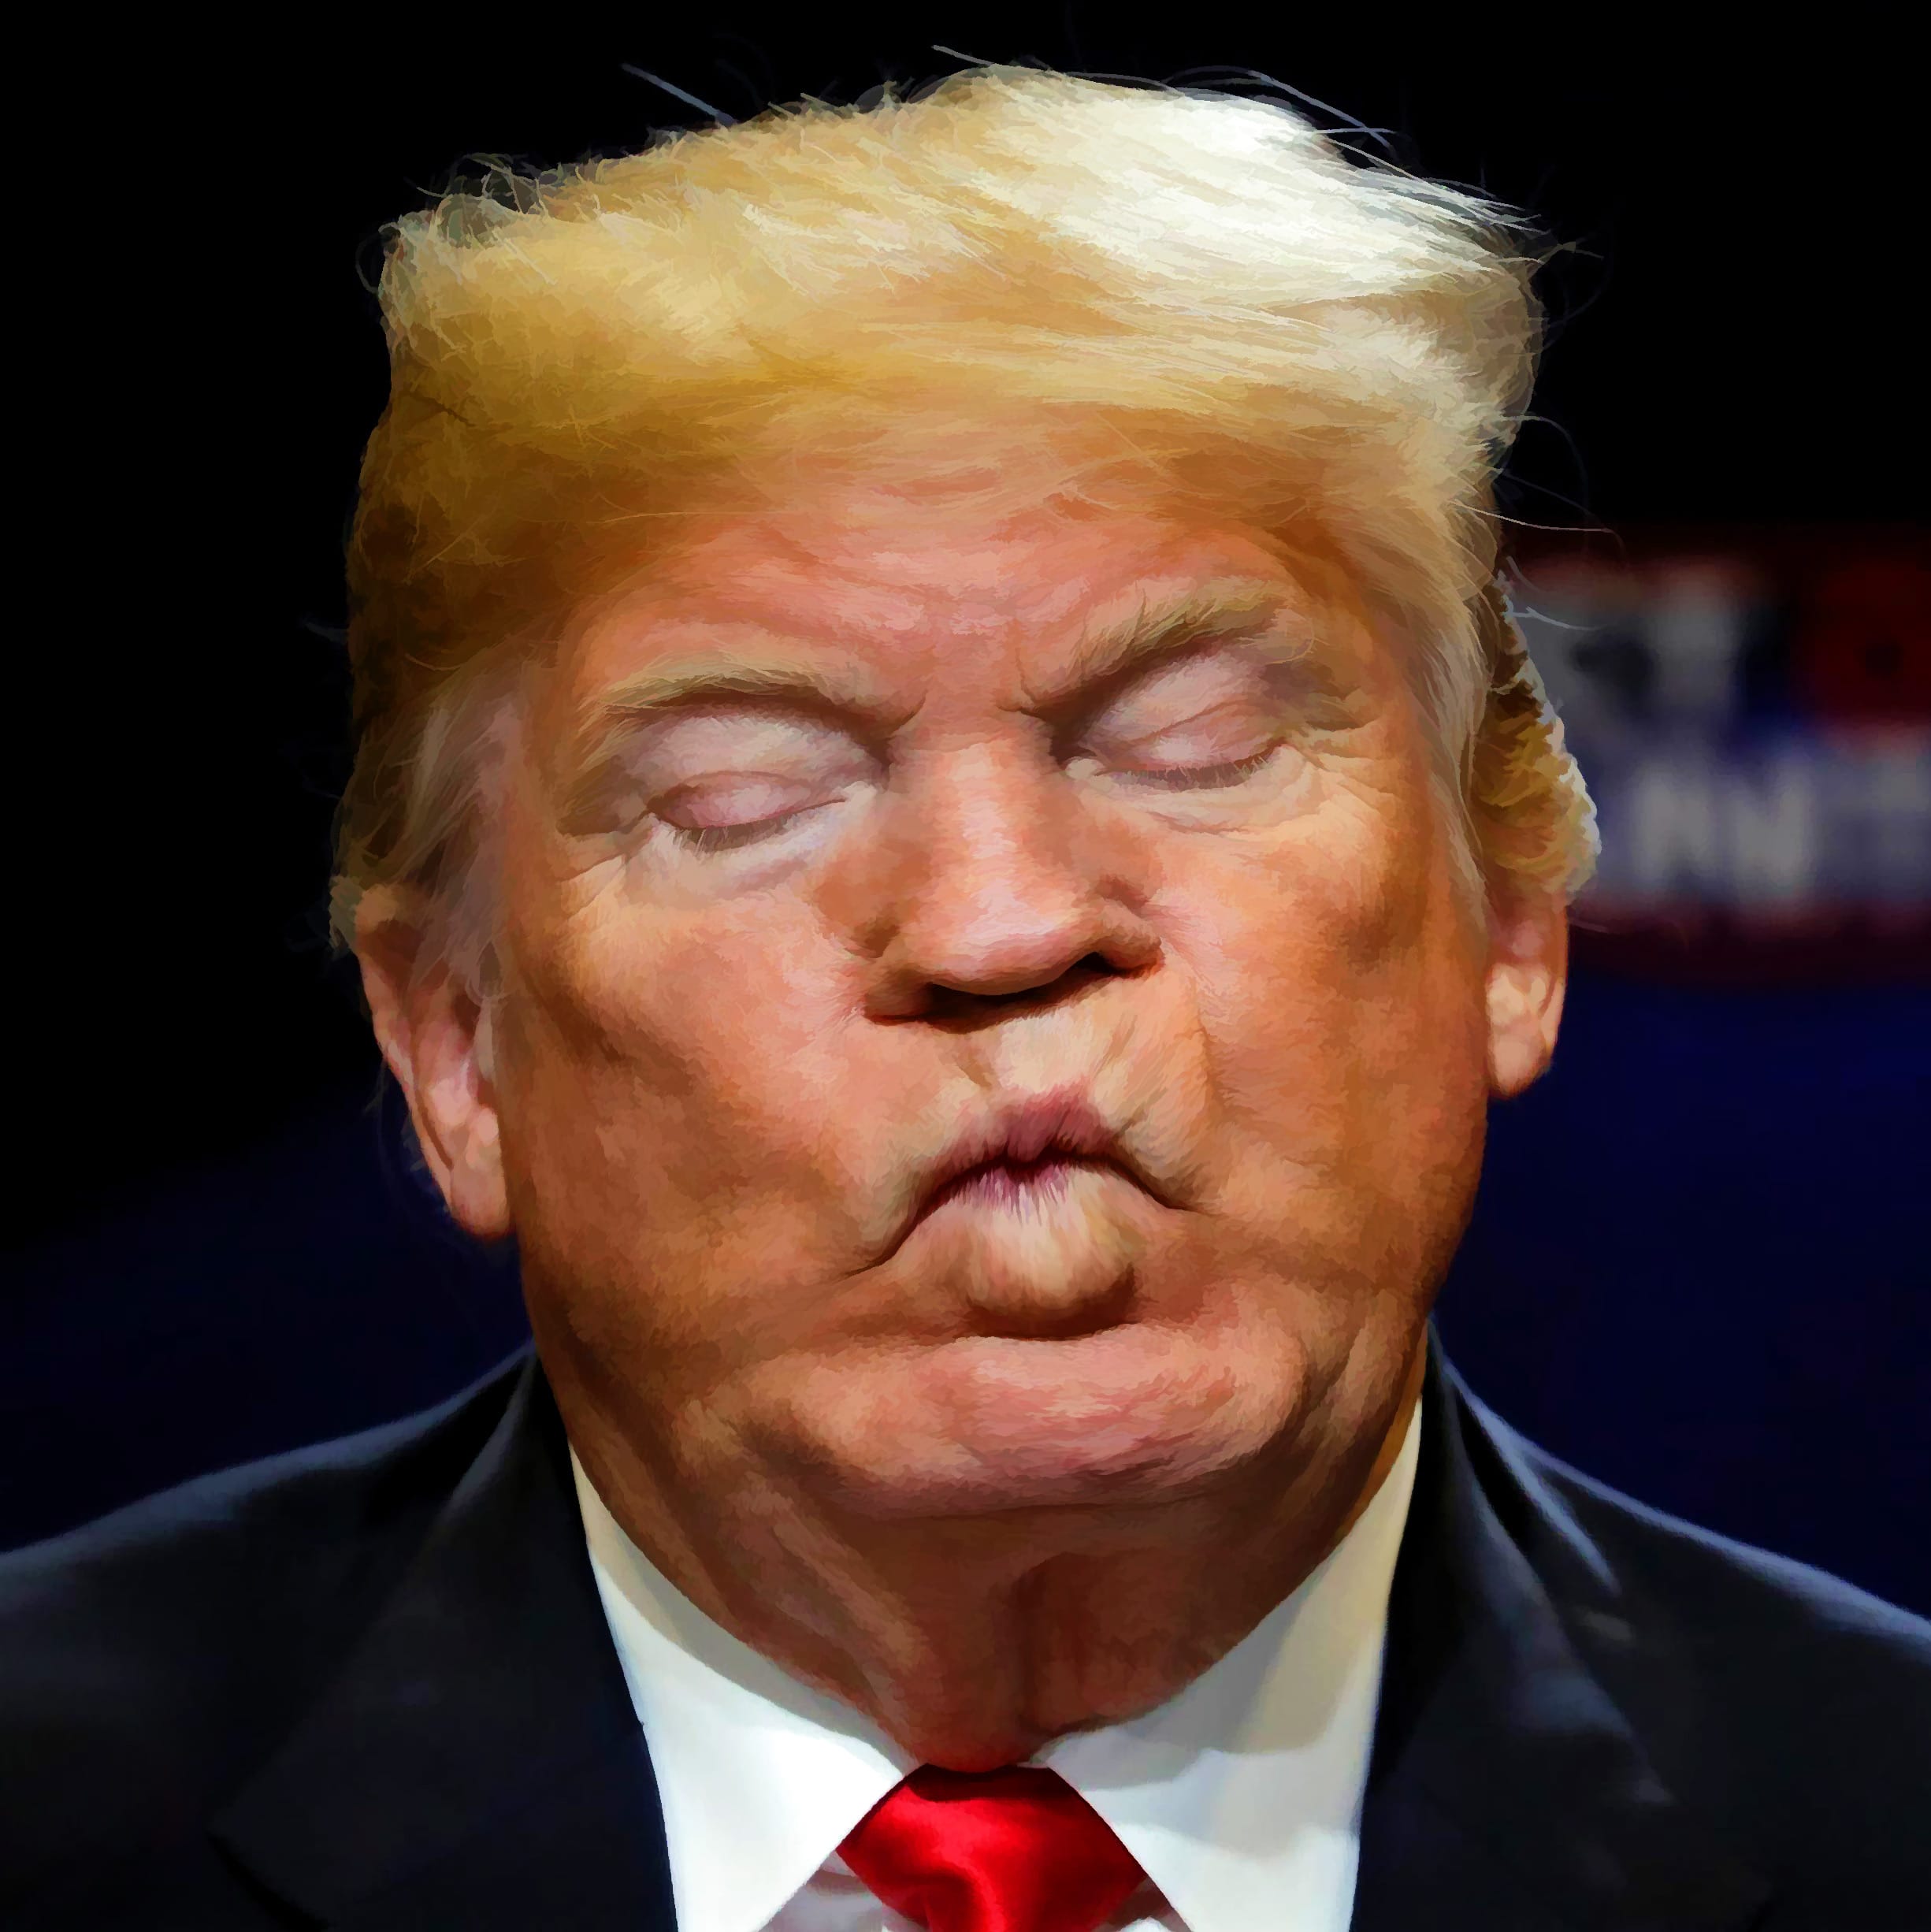 Donald Trump schmollt facing the asshole buzi